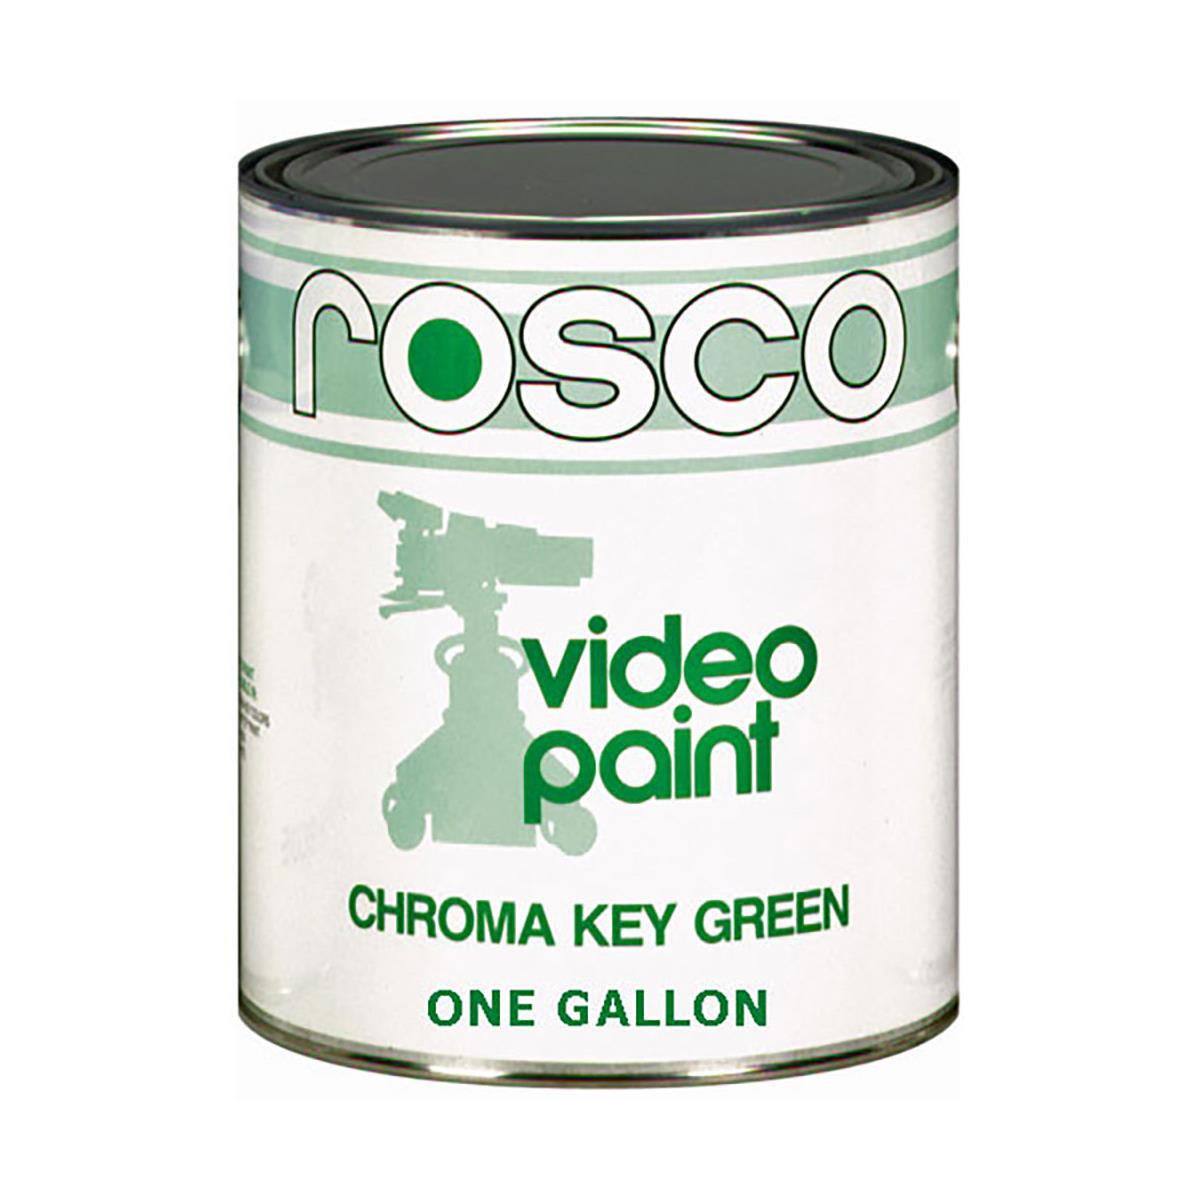 Image of Rosco Chroma Key Matte Green Paint - Gallon